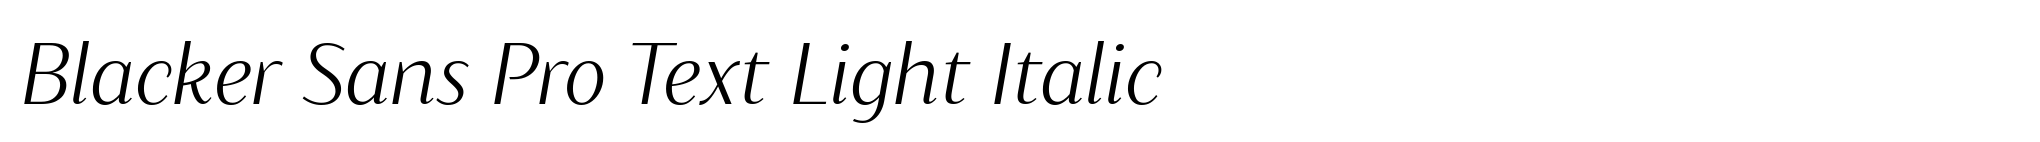 Blacker Sans Pro Text Light Italic image